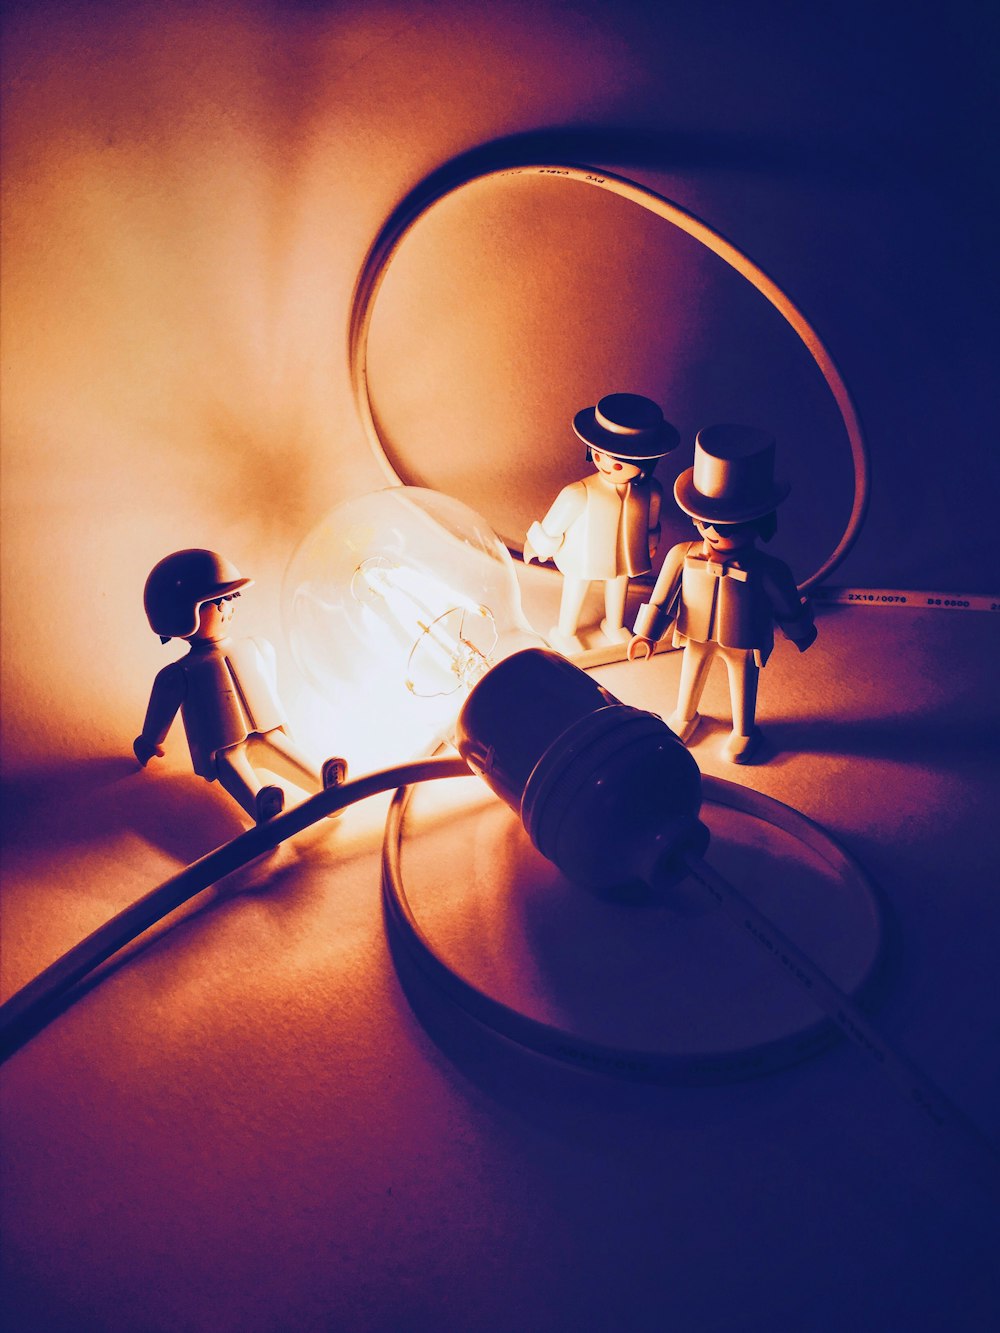 selective focus photography of three men figurines near lighted light bulb